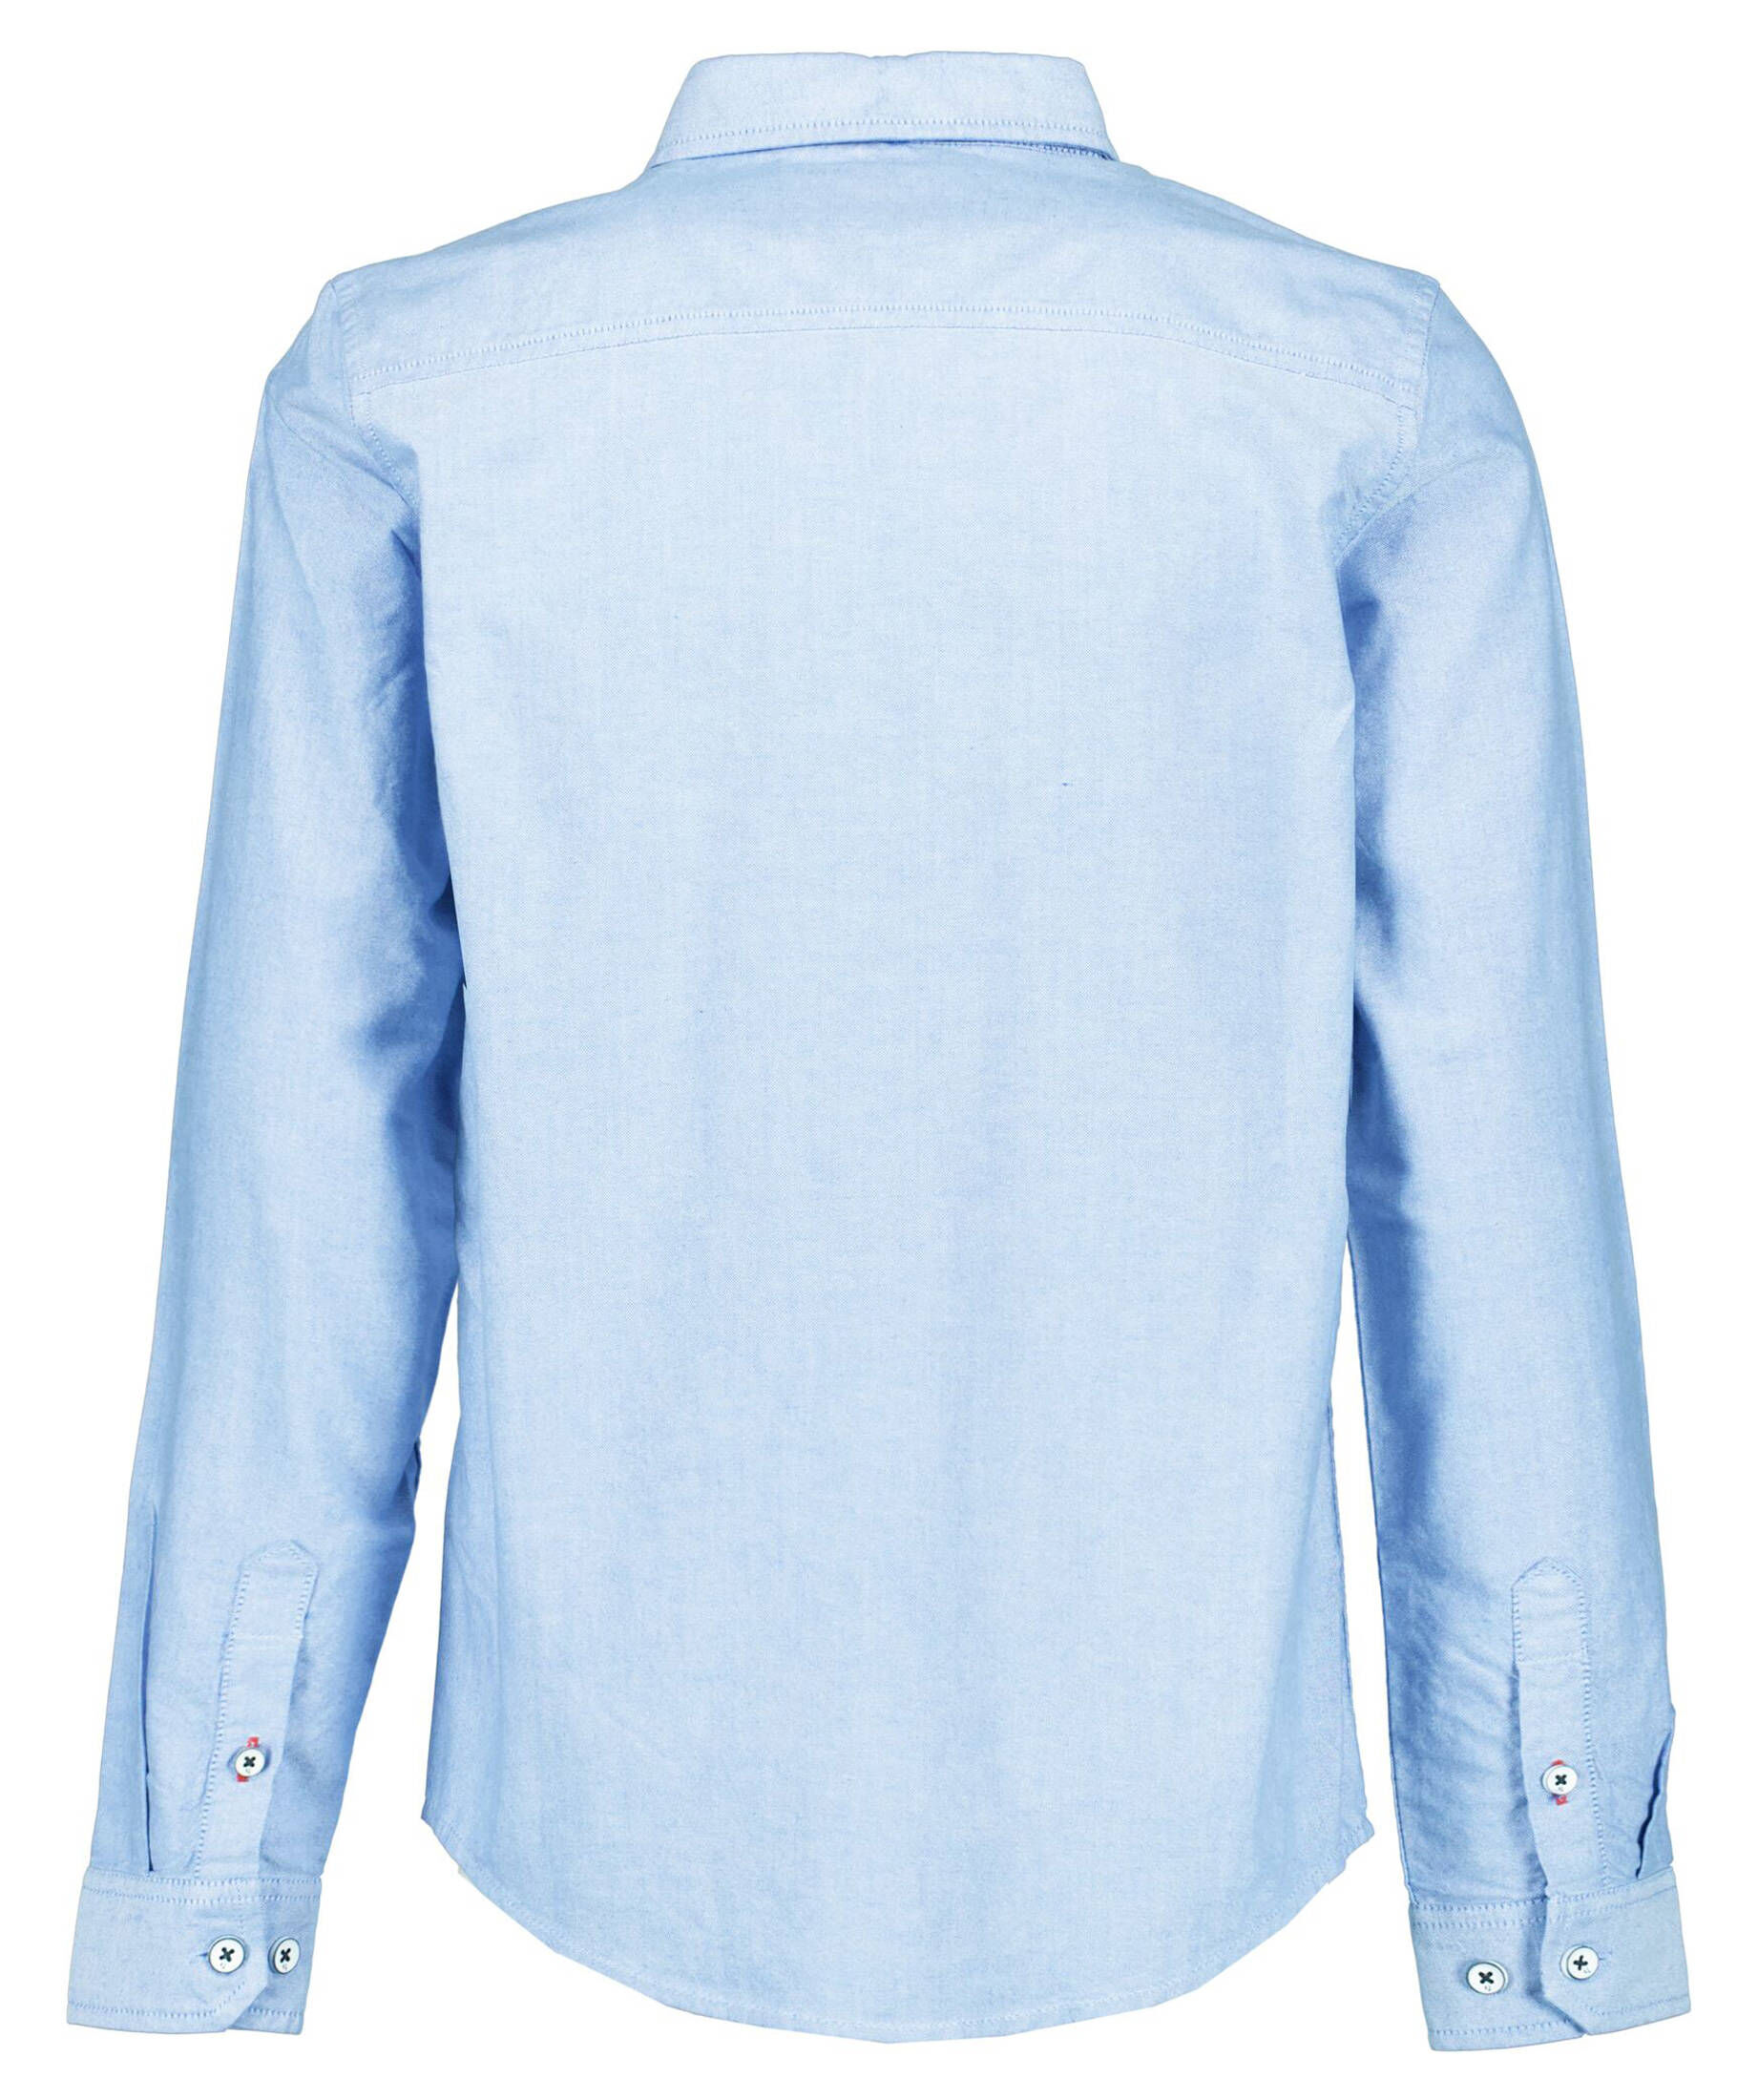 Garcia Jungen Hemd langarm hellblau gemustert Gr 92-134 Anzughemd Festmode 